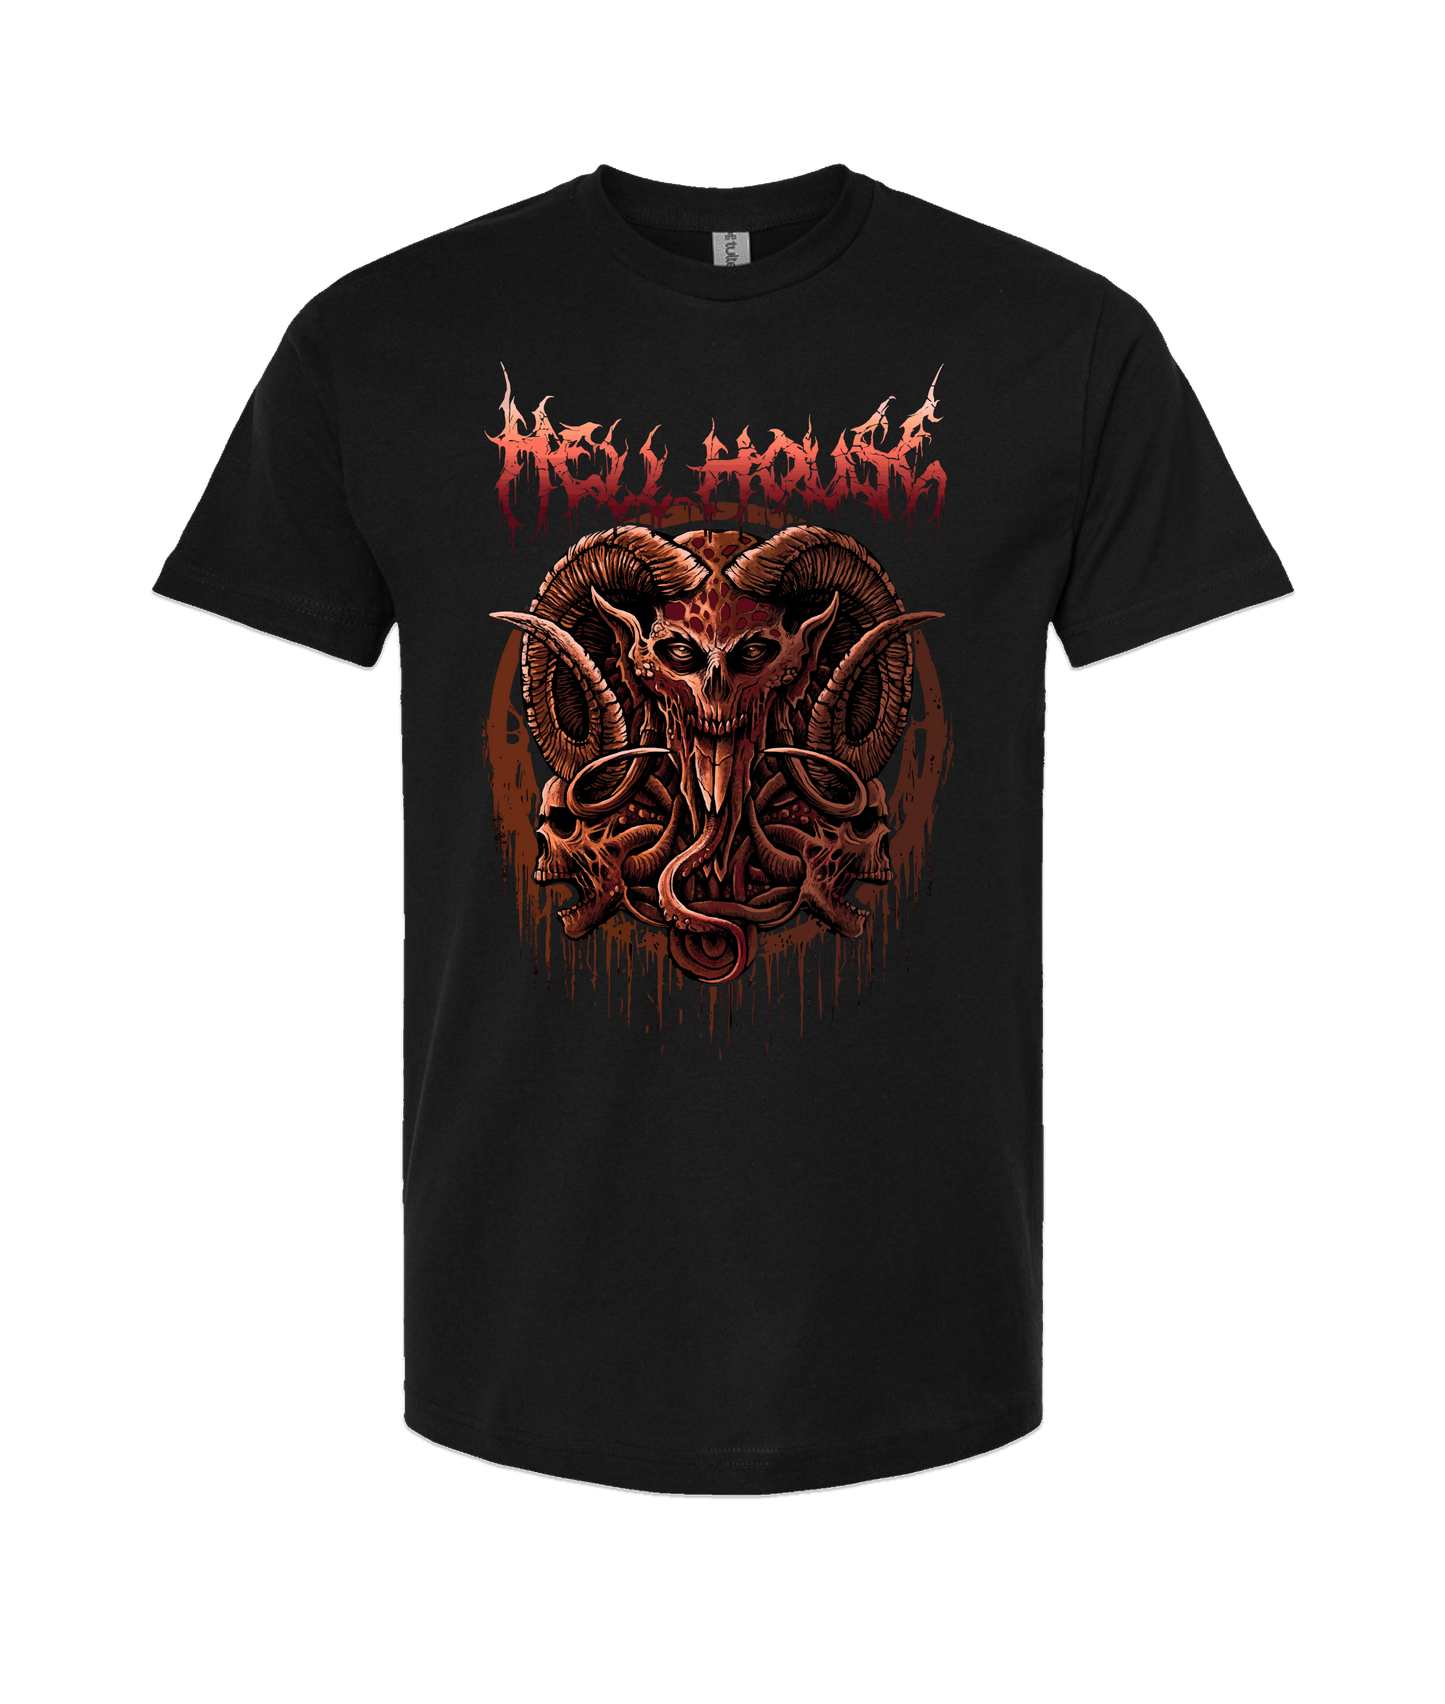 Hellhouse crypt - LORDSKVLL - Black T-Shirt